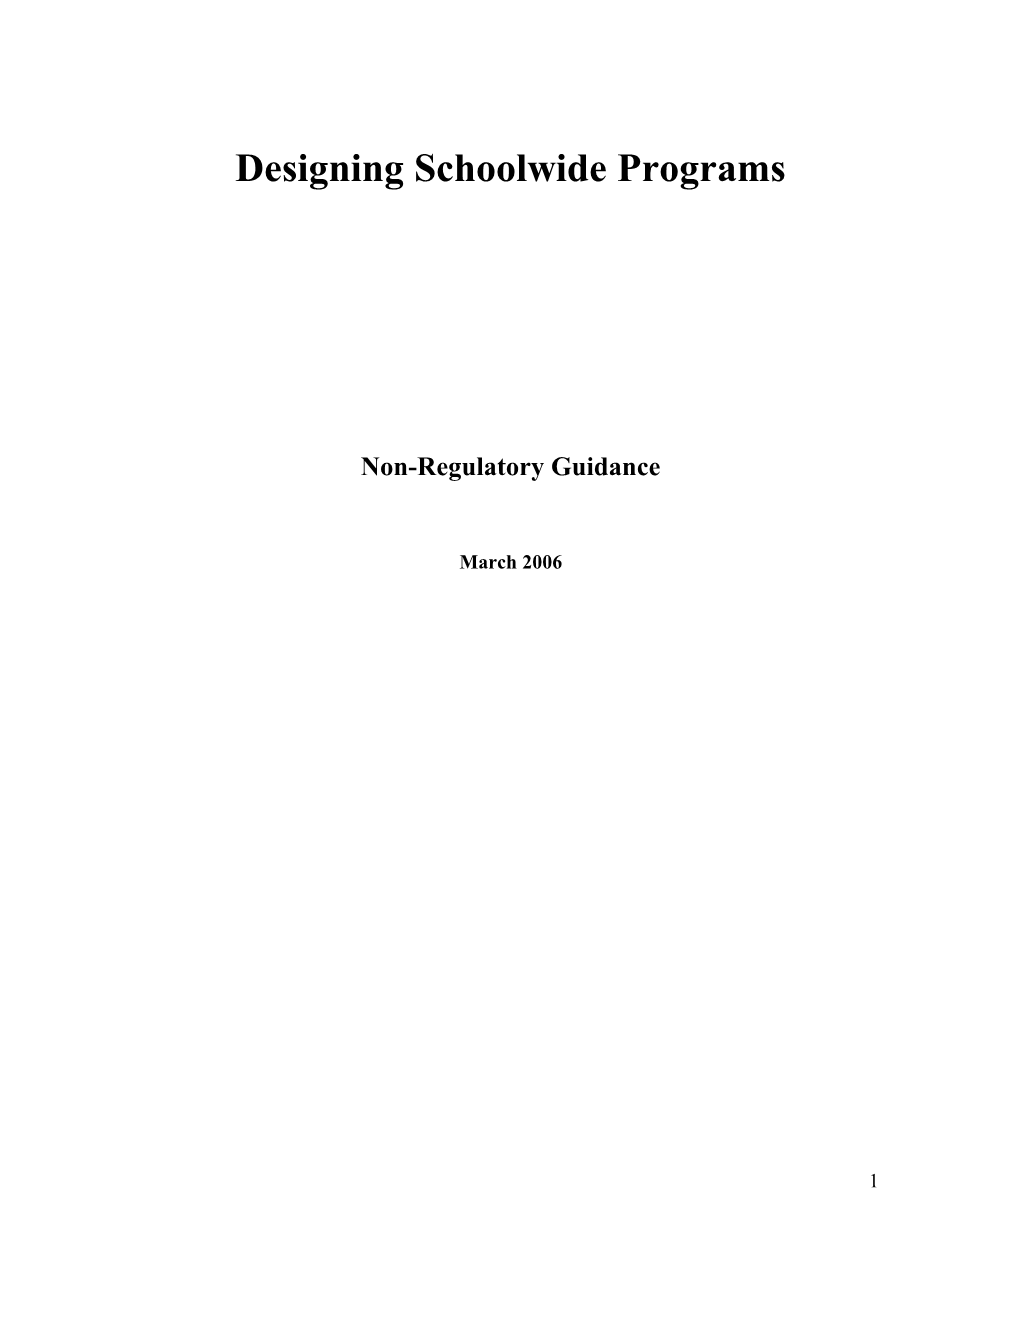 Designing Schoolwide Programs Non-Regulatory Guidance (MS Word)